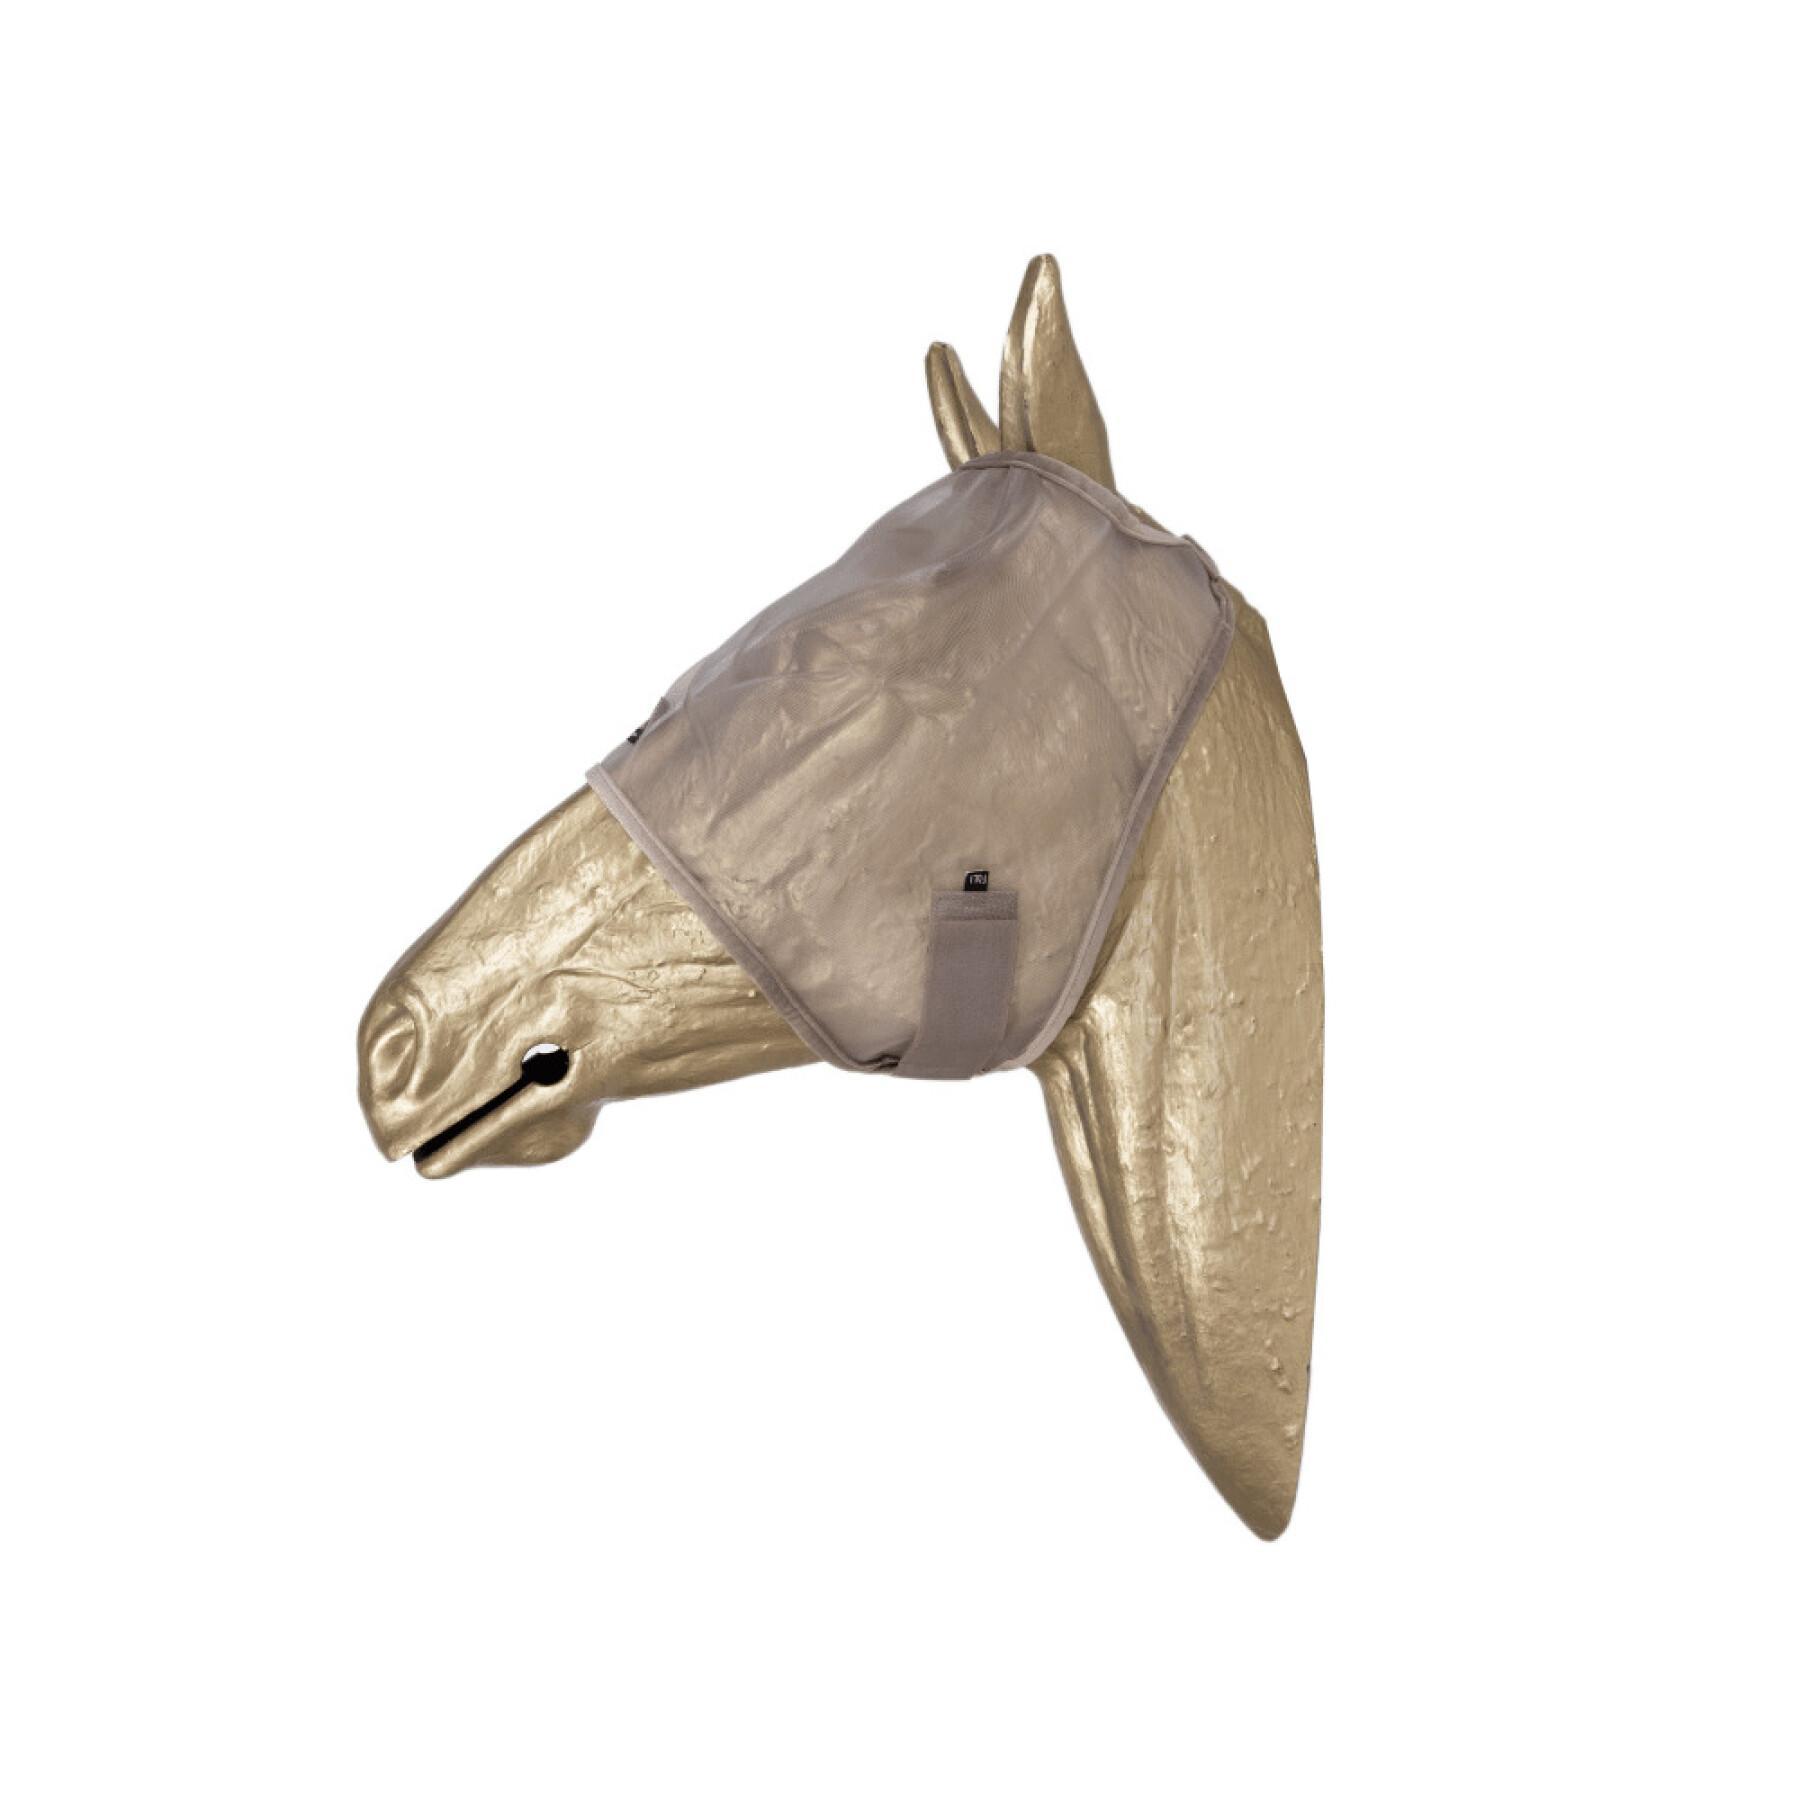 Máscara anti-moscas para caballos sin orejas - anti-uv Kentucky Classic